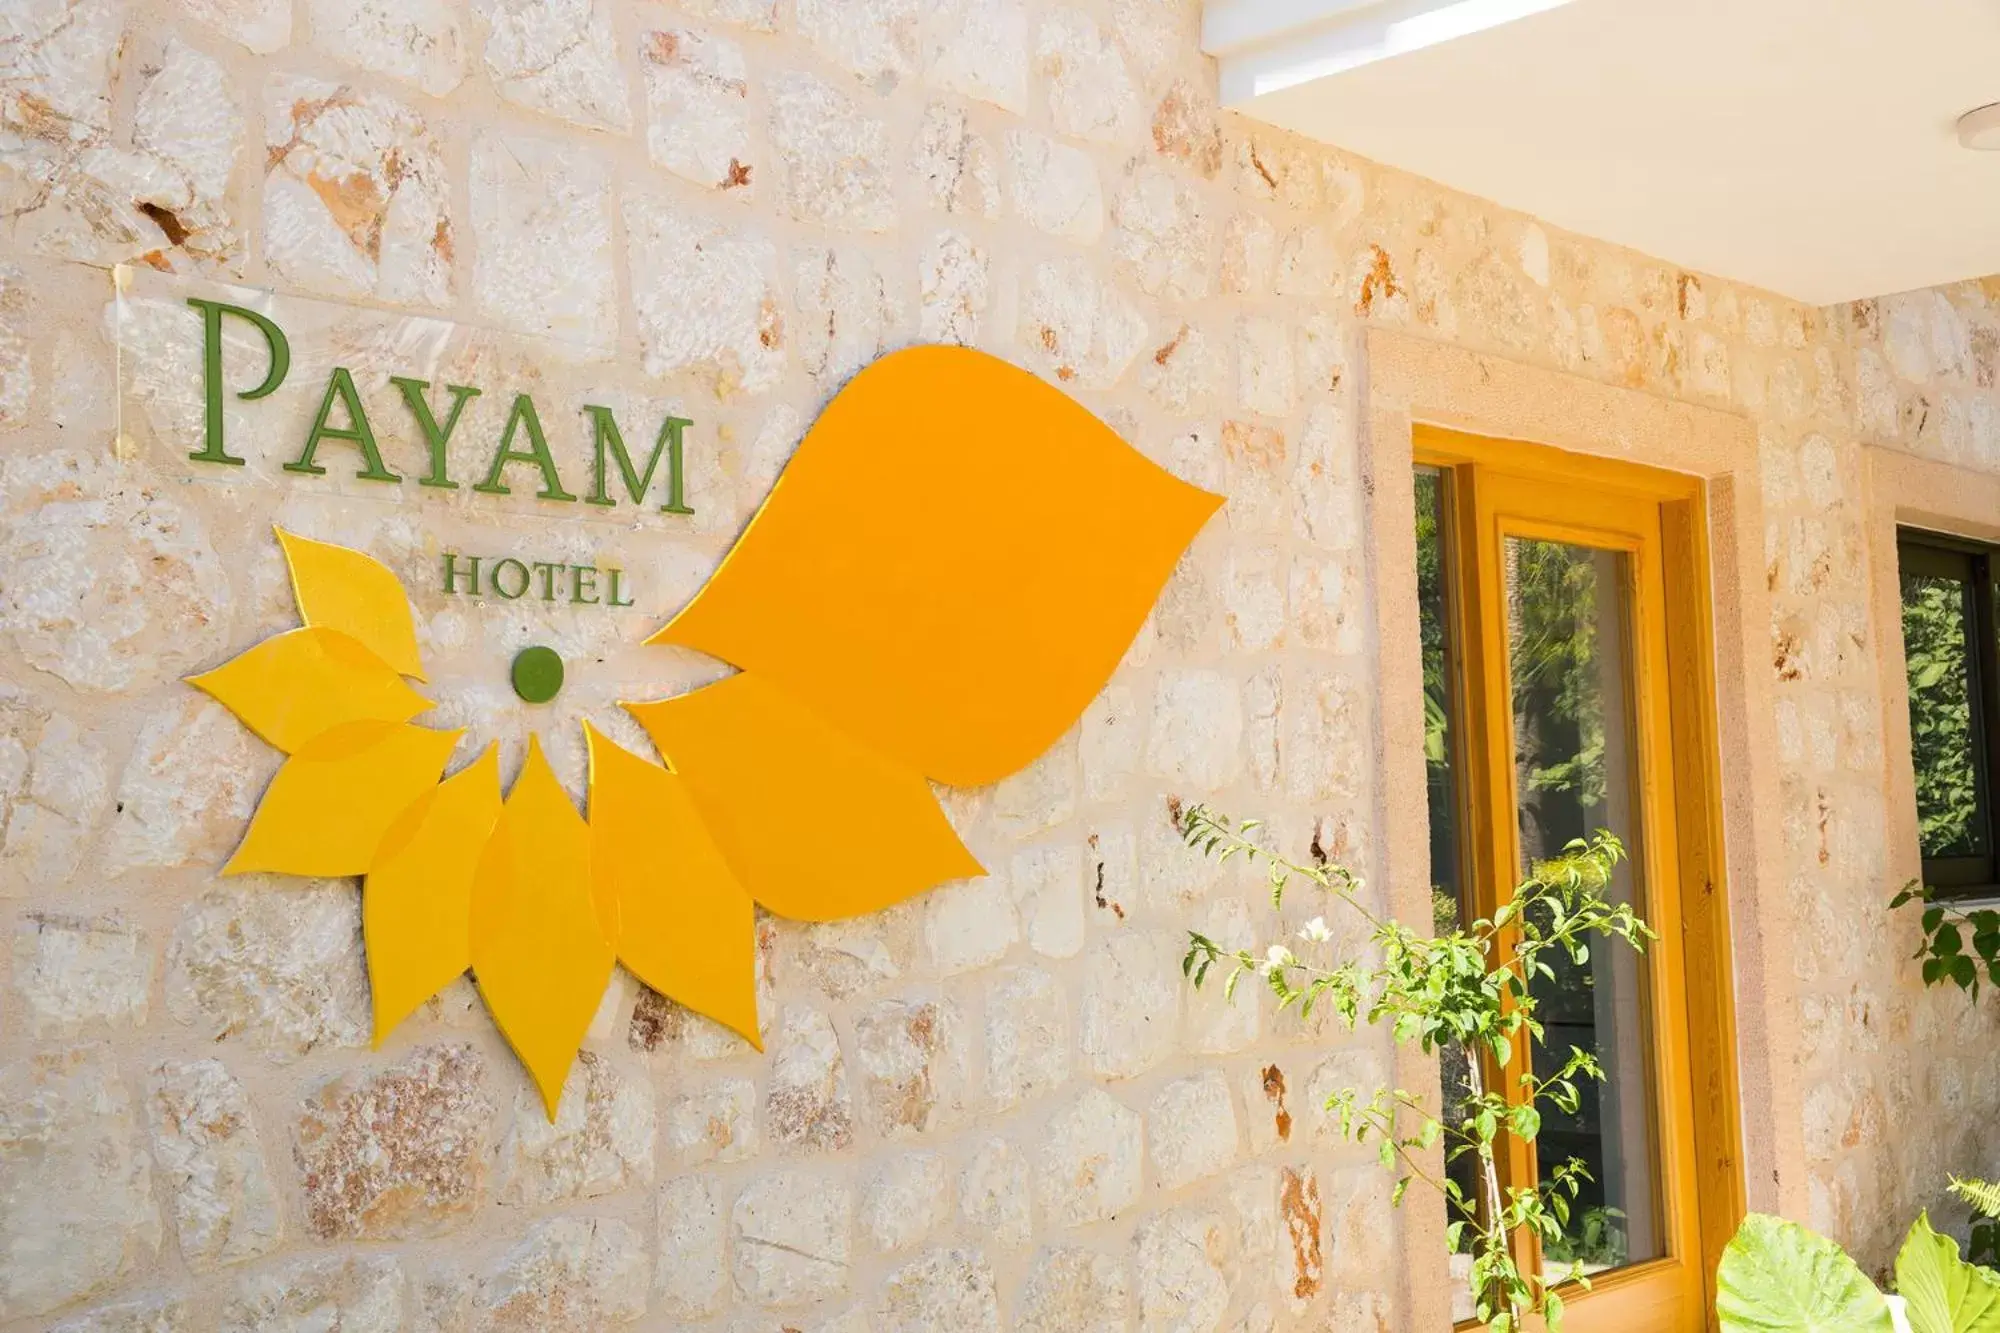 Property logo or sign, Logo/Certificate/Sign/Award in Payam Hotel